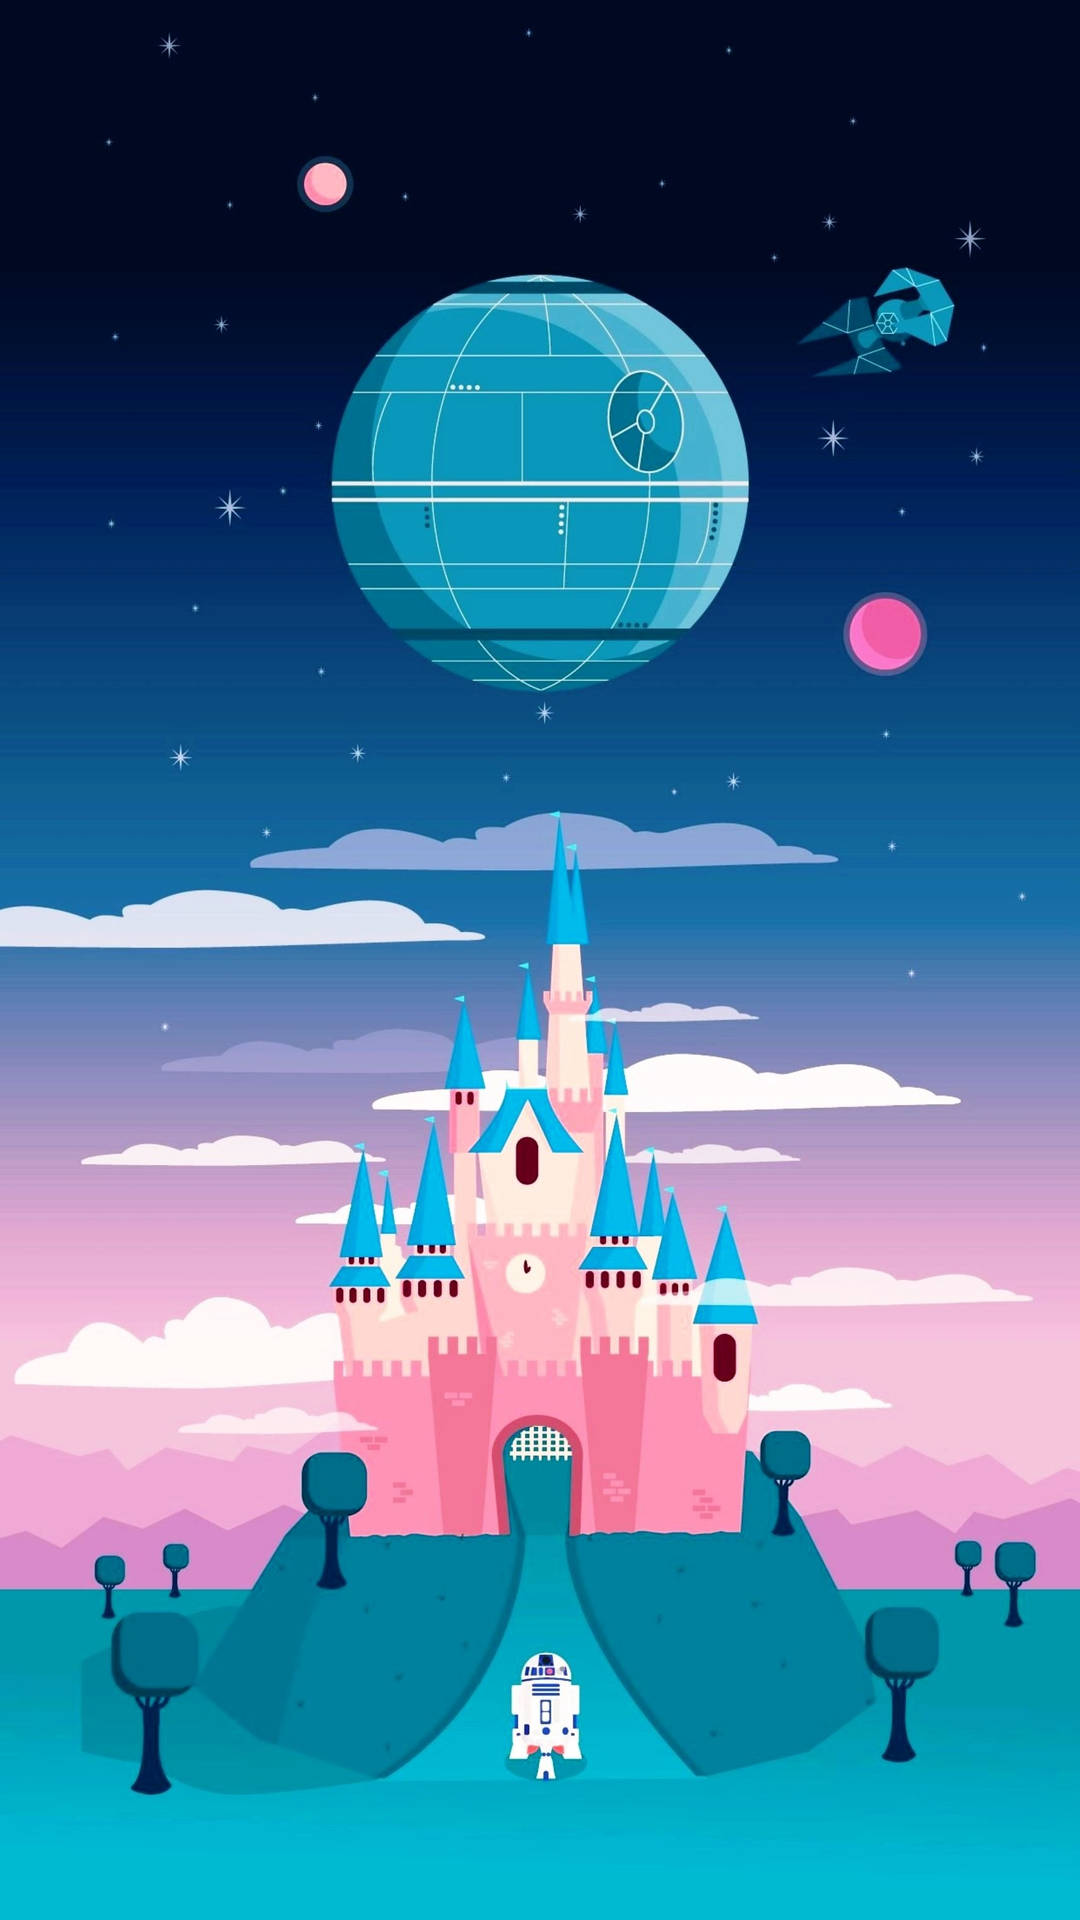 Free Disney iPhone Wallpaper Downloads, Disney iPhone Wallpaper for FREE